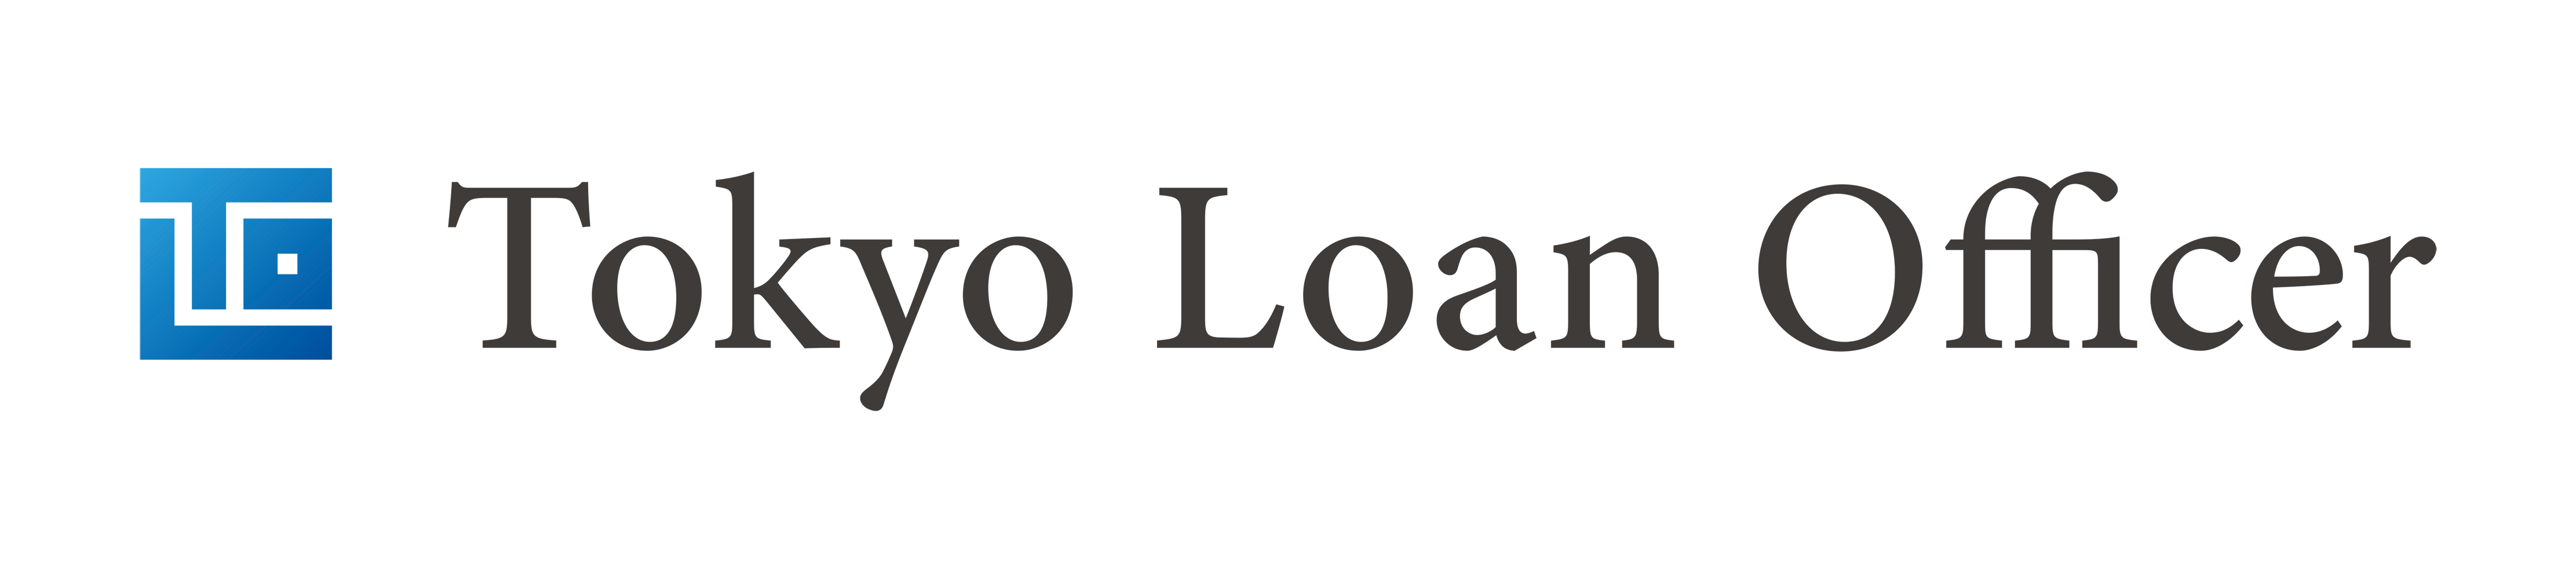 Tokyo Loan Officer｜不動産融資のプロフェッショナル